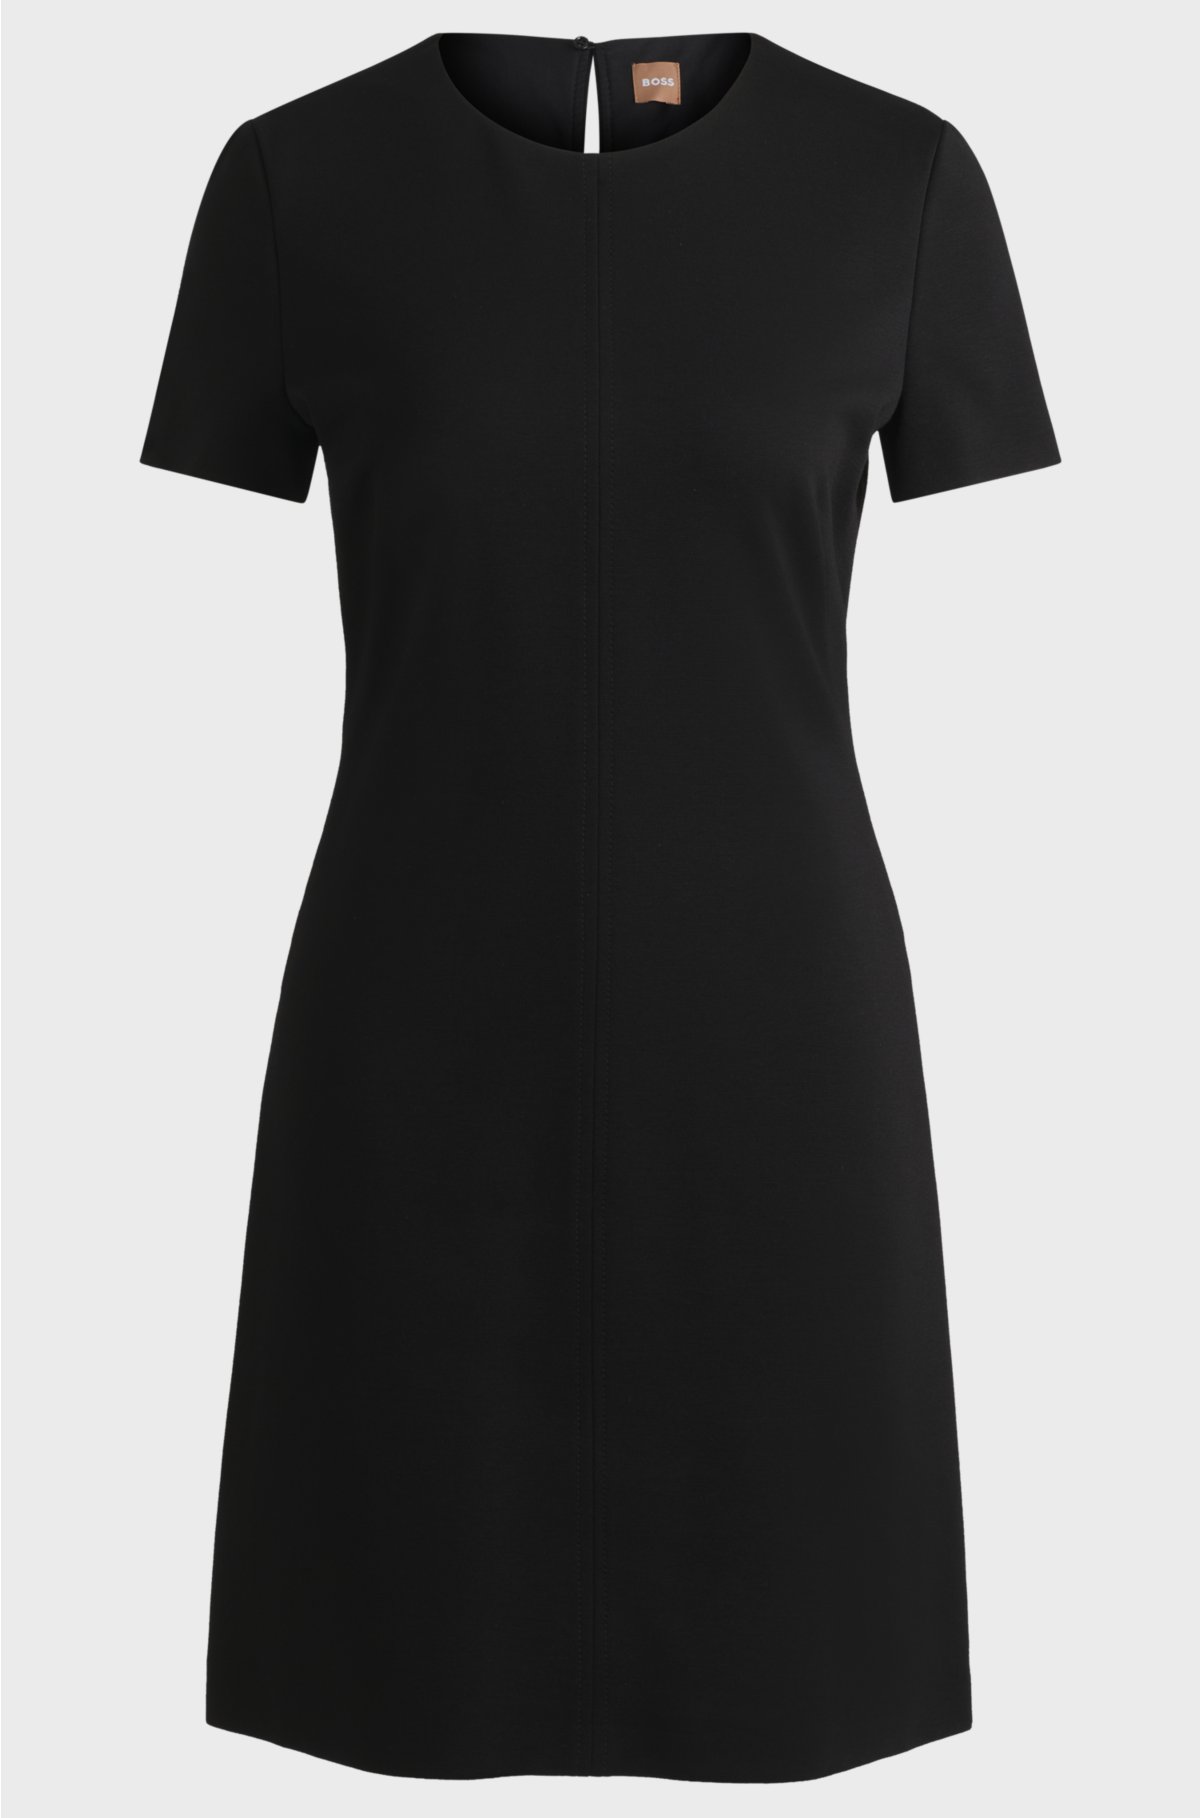 Slim-fit crew-neck dress in stretch fabric, Black